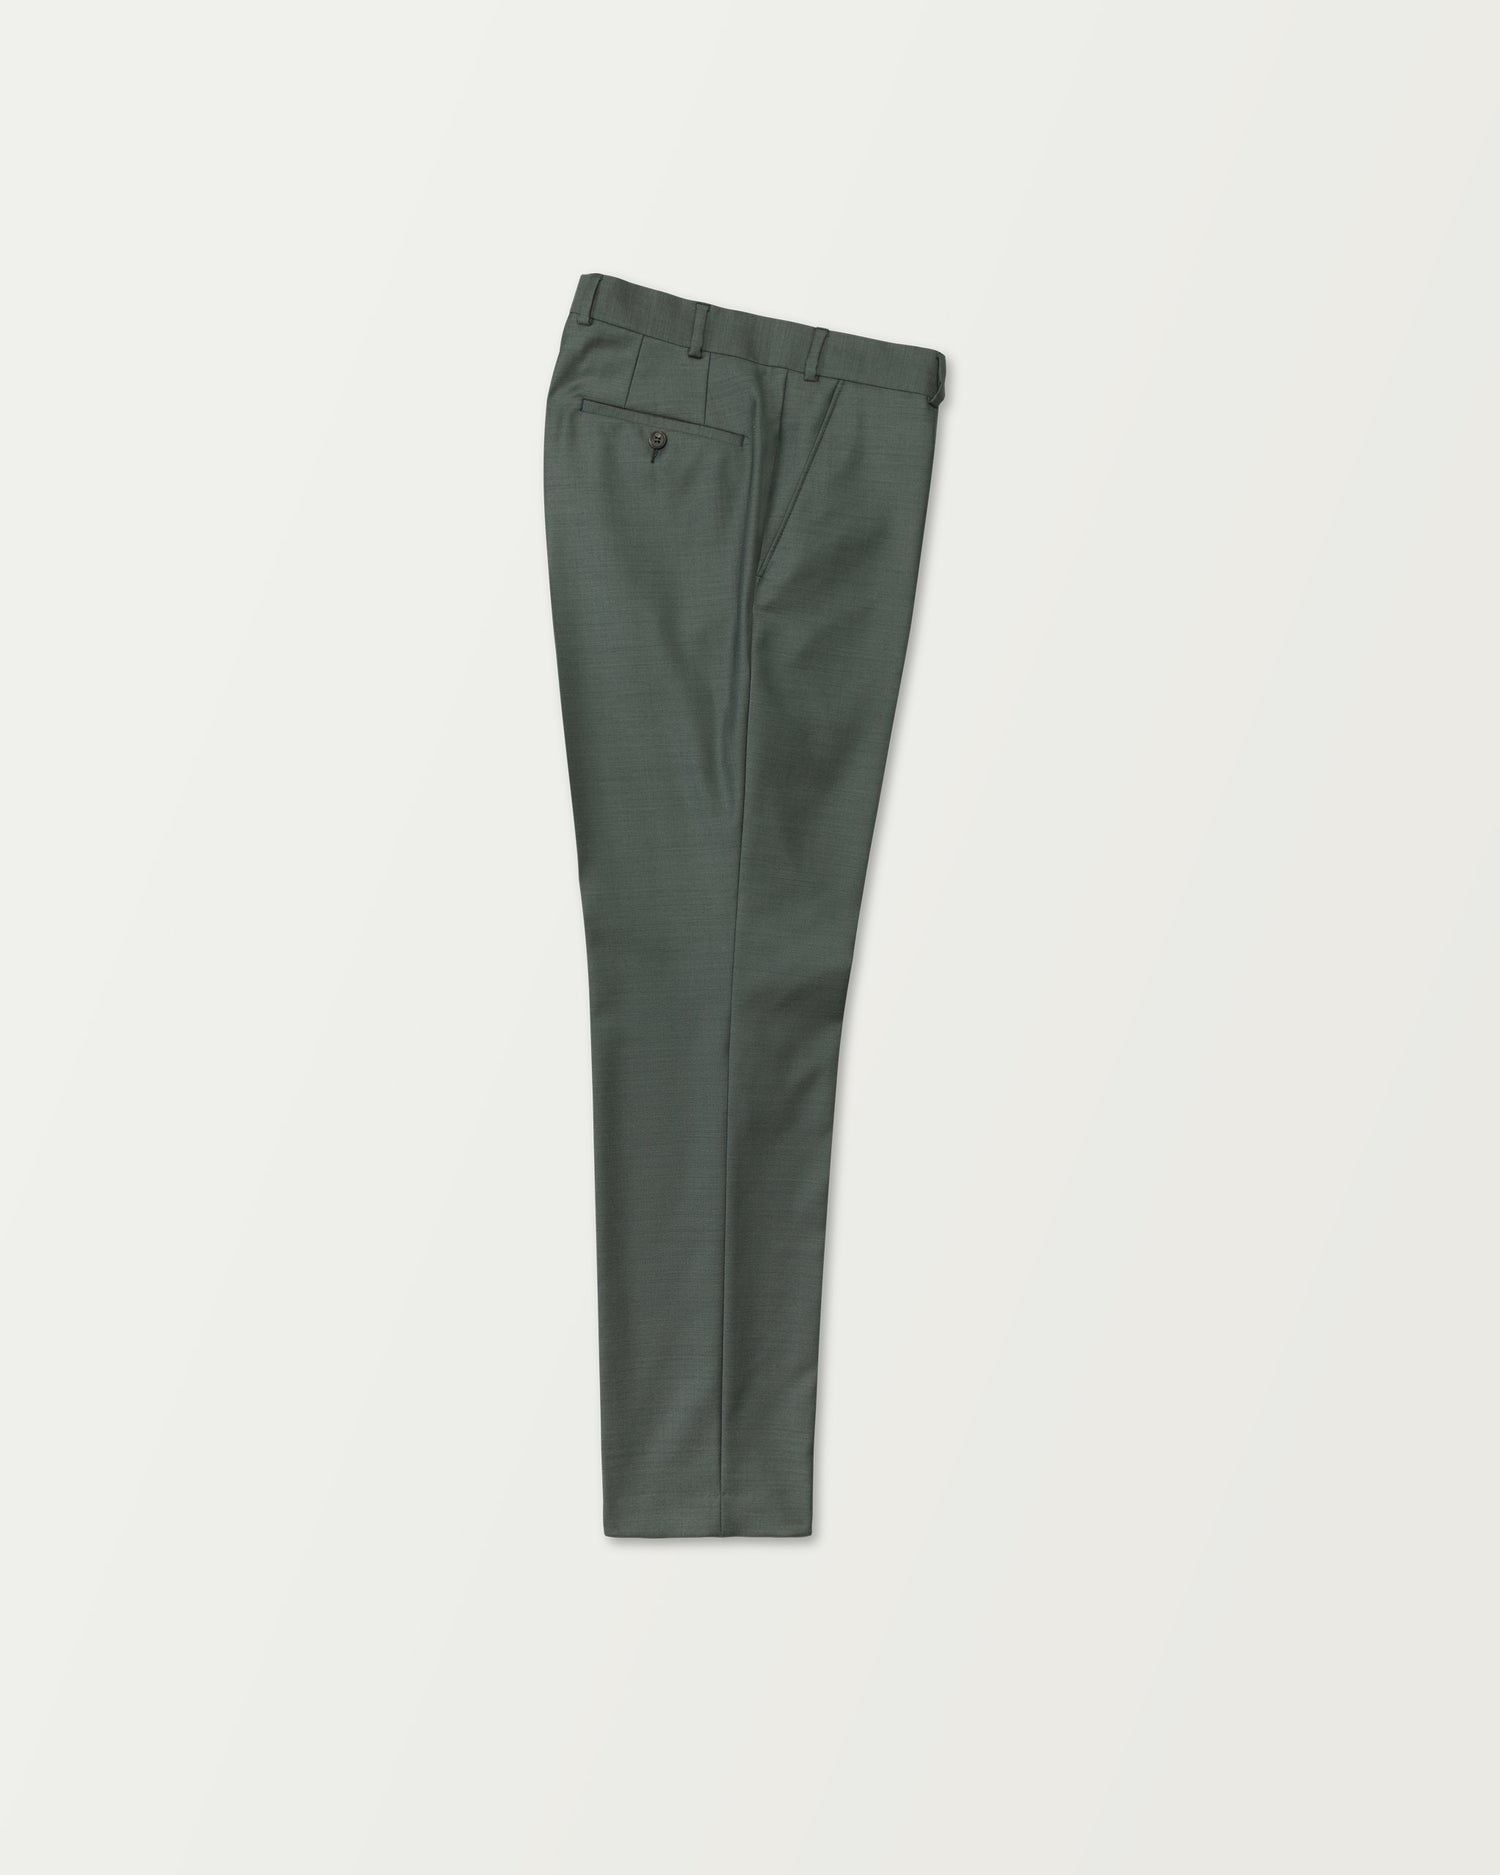 Green Premium Wool Suit in Modern Fit (8643296198986)